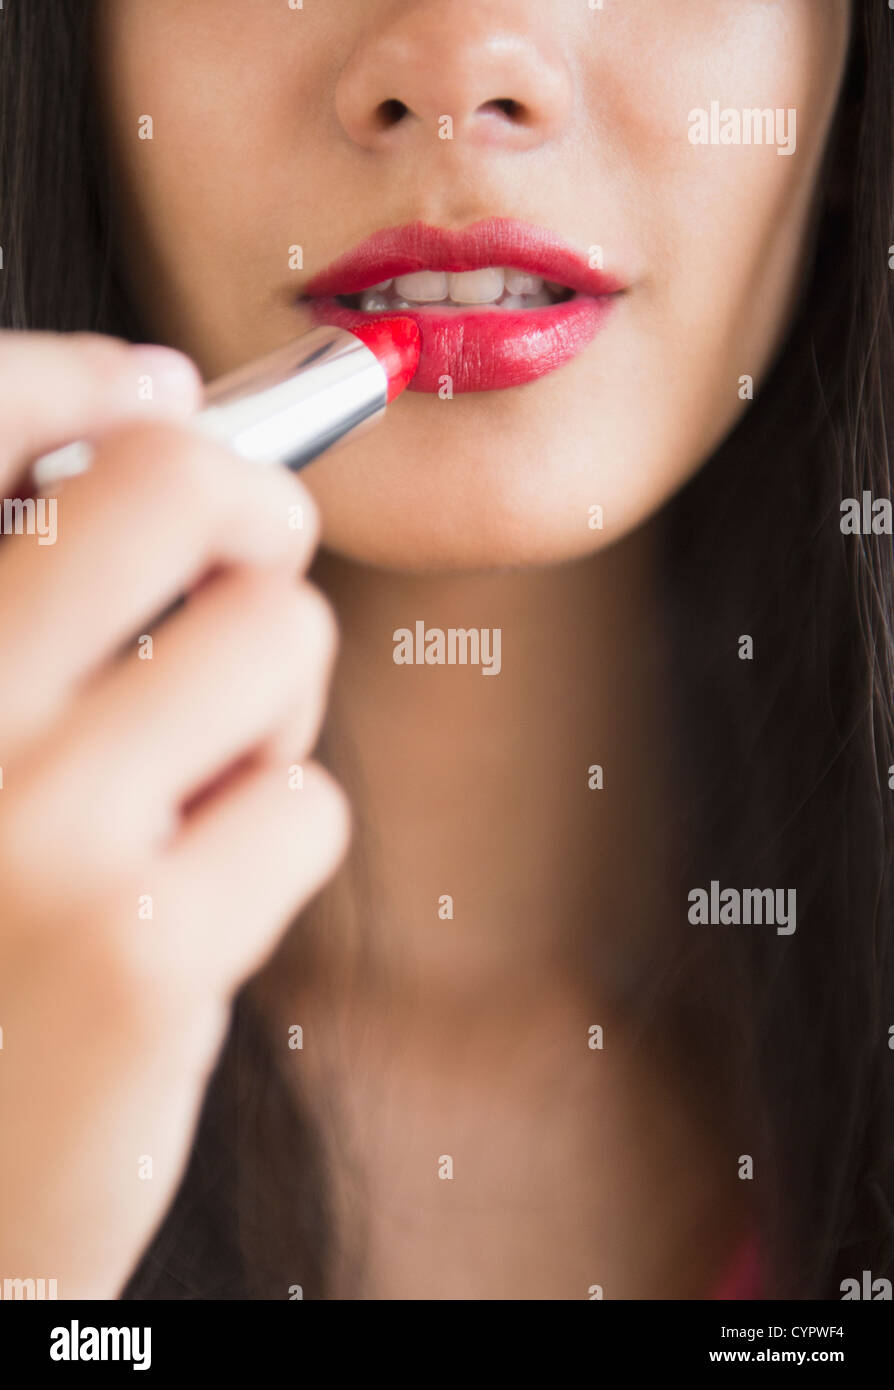 Hispanic teenager putting on lipstick Stock Photo